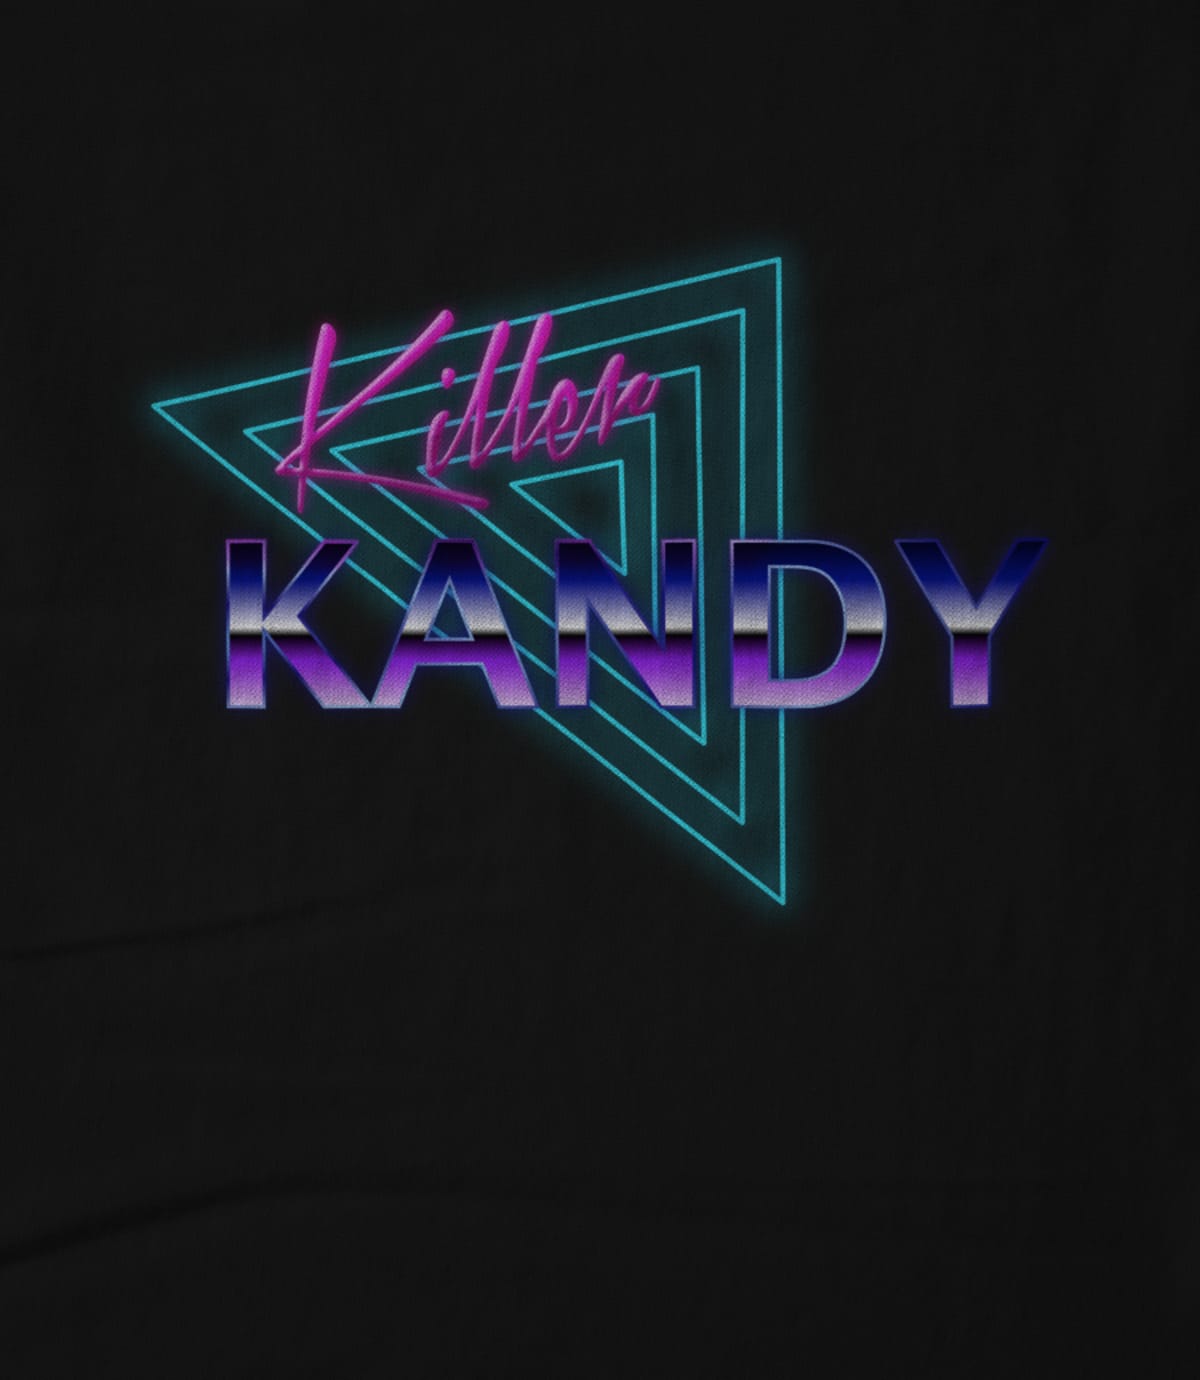 Killer Kandy